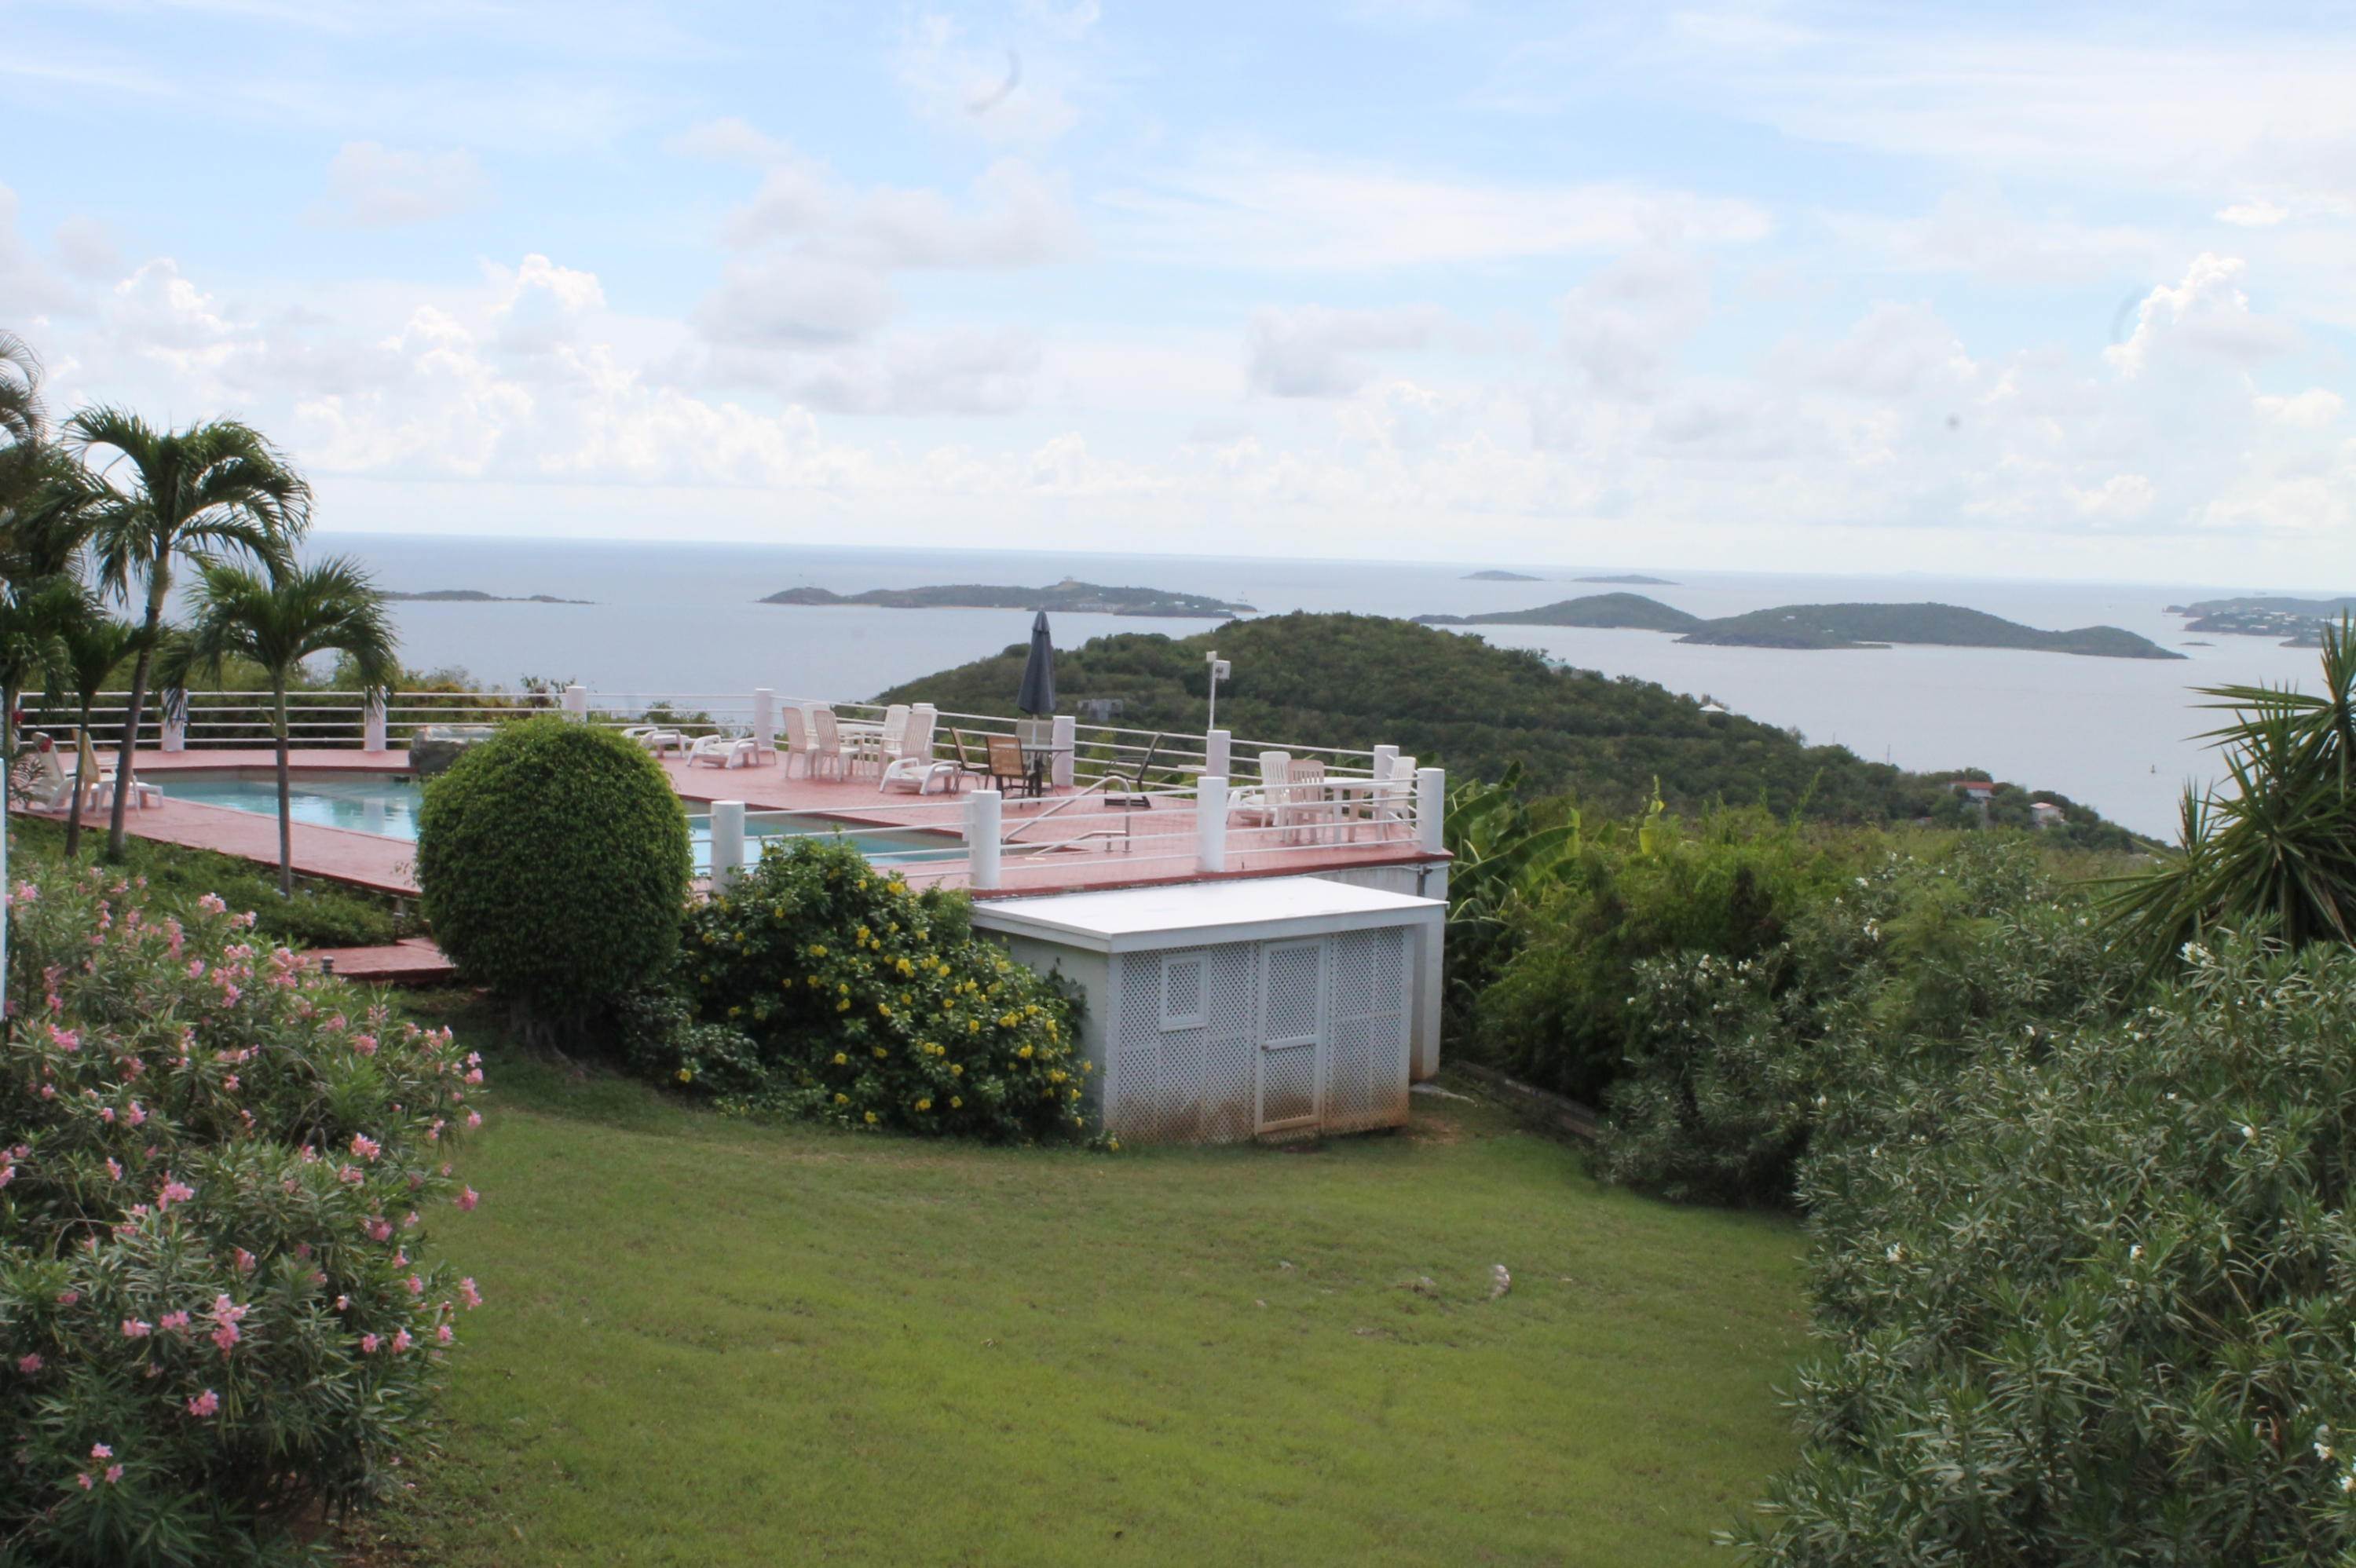 9. Fractional Ownership Property for Sale at Bethany St John, Virgin Islands 00830 United States Virgin Islands